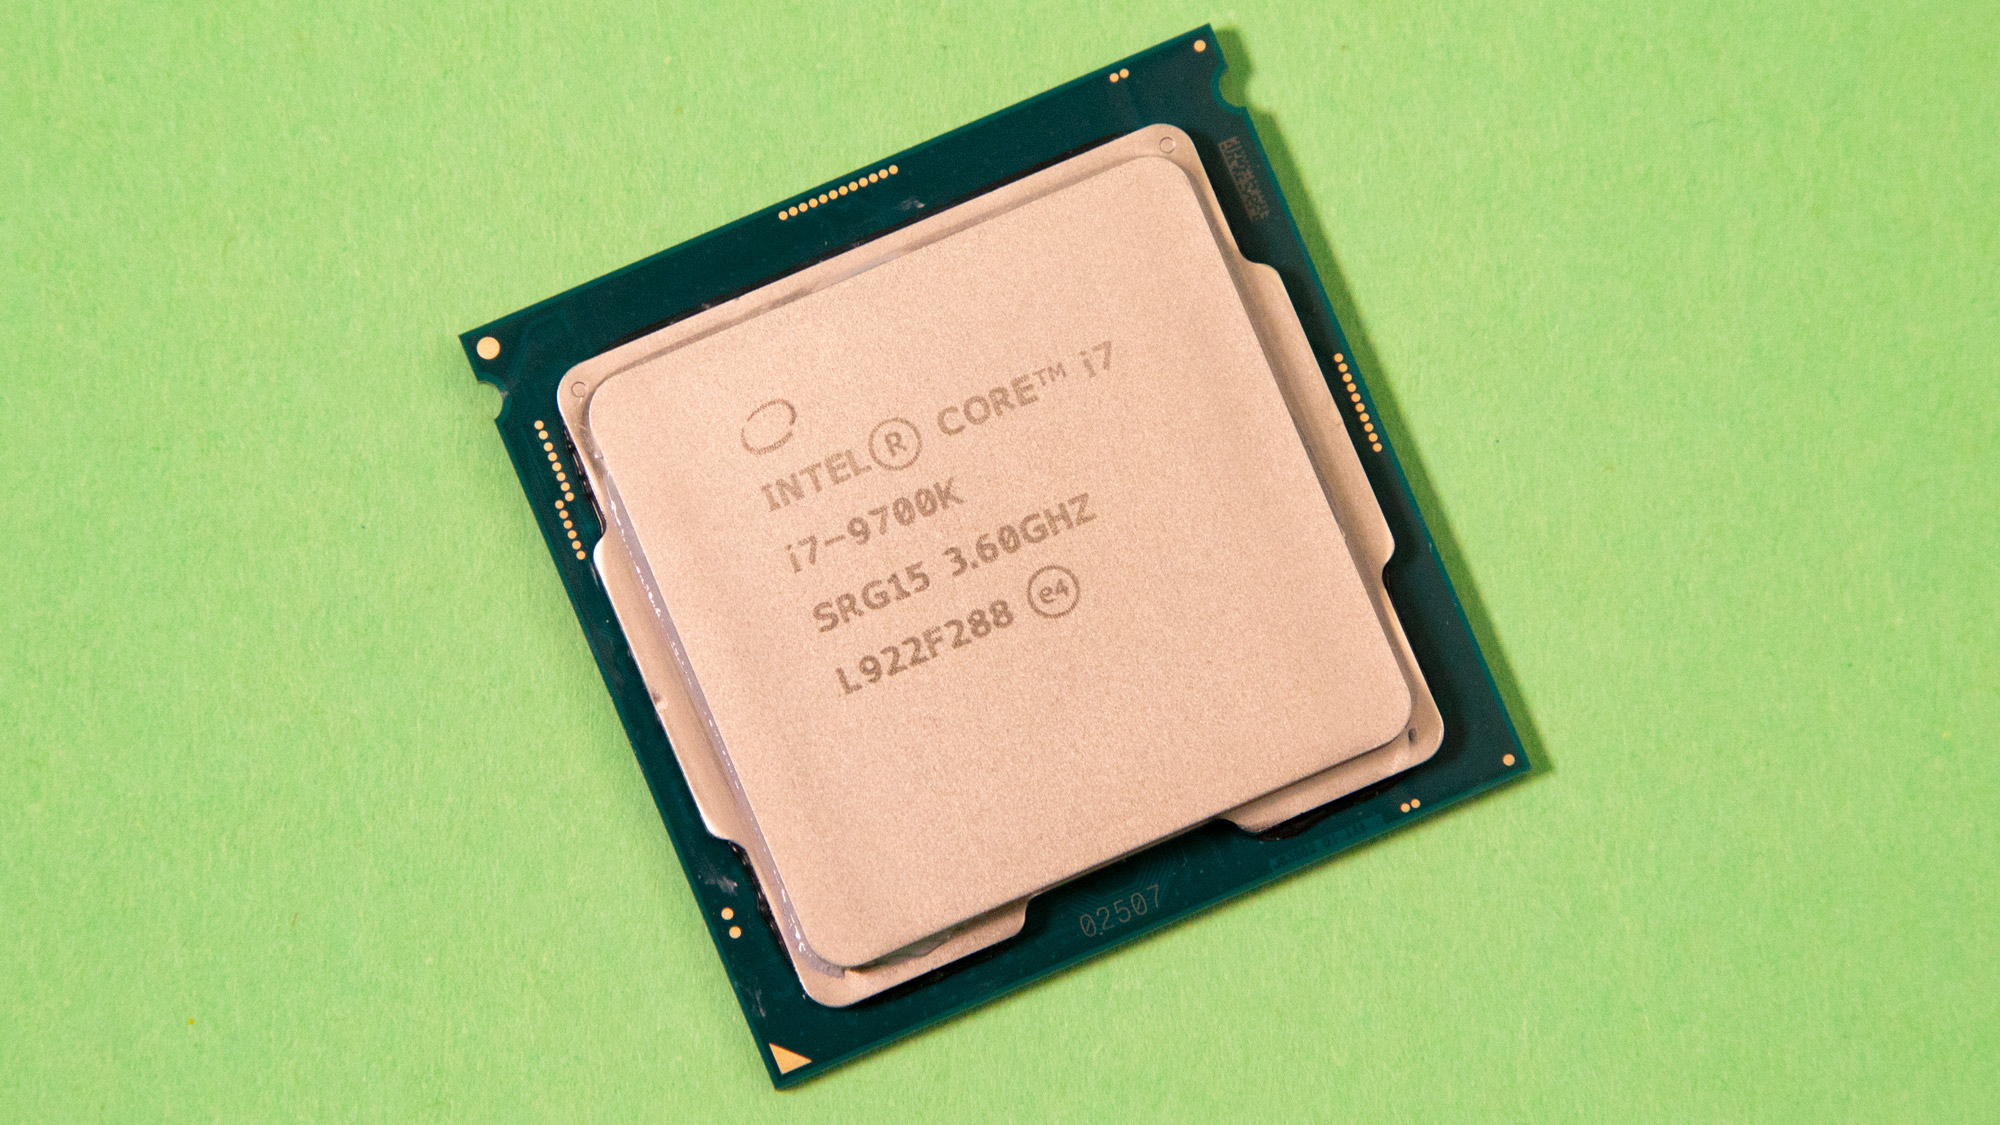 13600kf характеристики. Intel Core i7-9700k. Core i5 9600kf. Процессор Intel Core i5-9600kf. Процессор Intel Core i5-9600kf OEM.